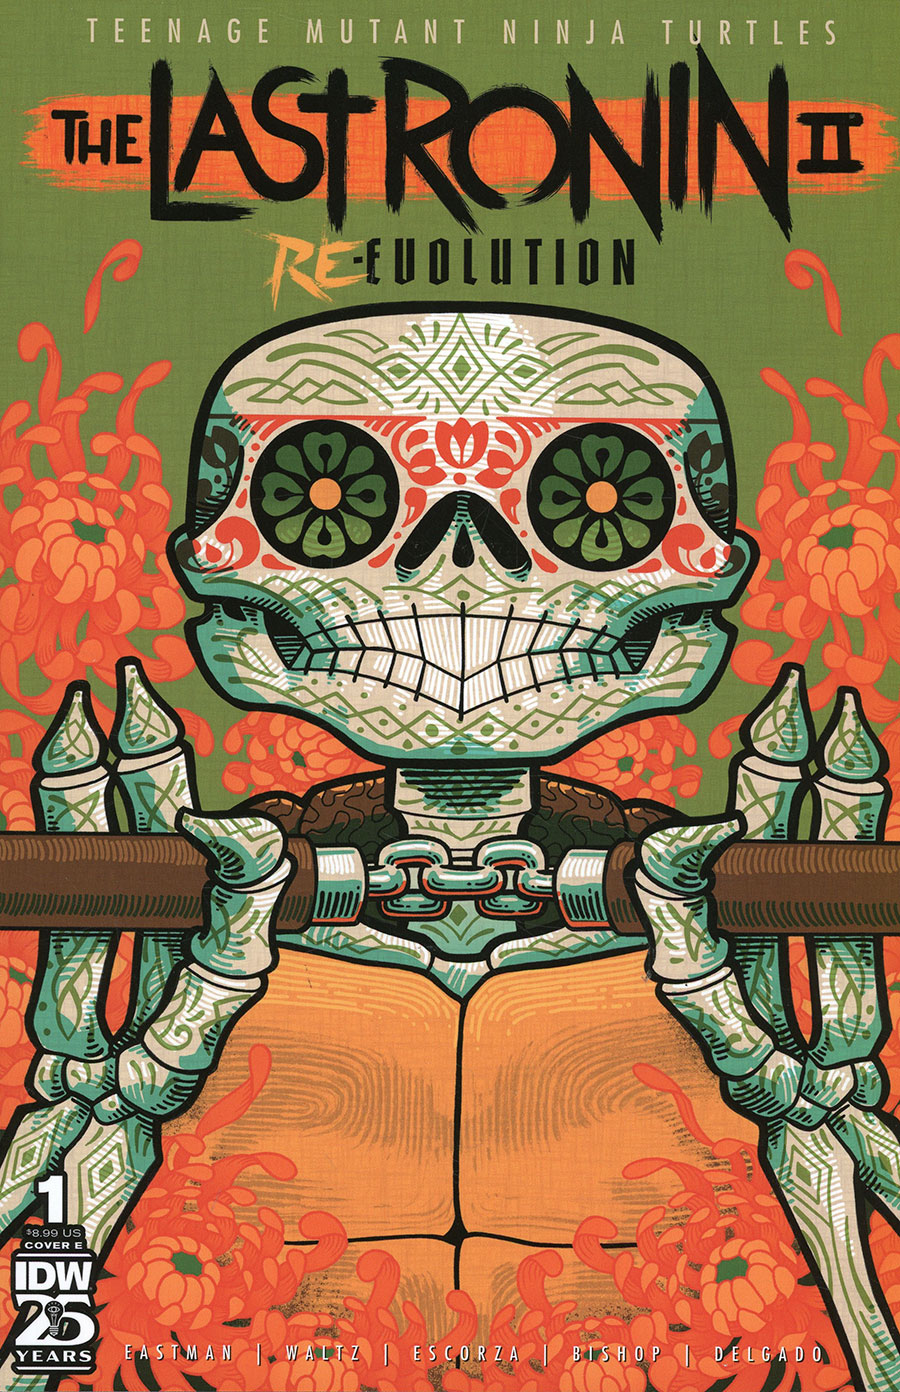 Teenage Mutant Ninja Turtles The Last Ronin II Re-Evolution #1 Cover E Variant Dia De Los Muertos Cover